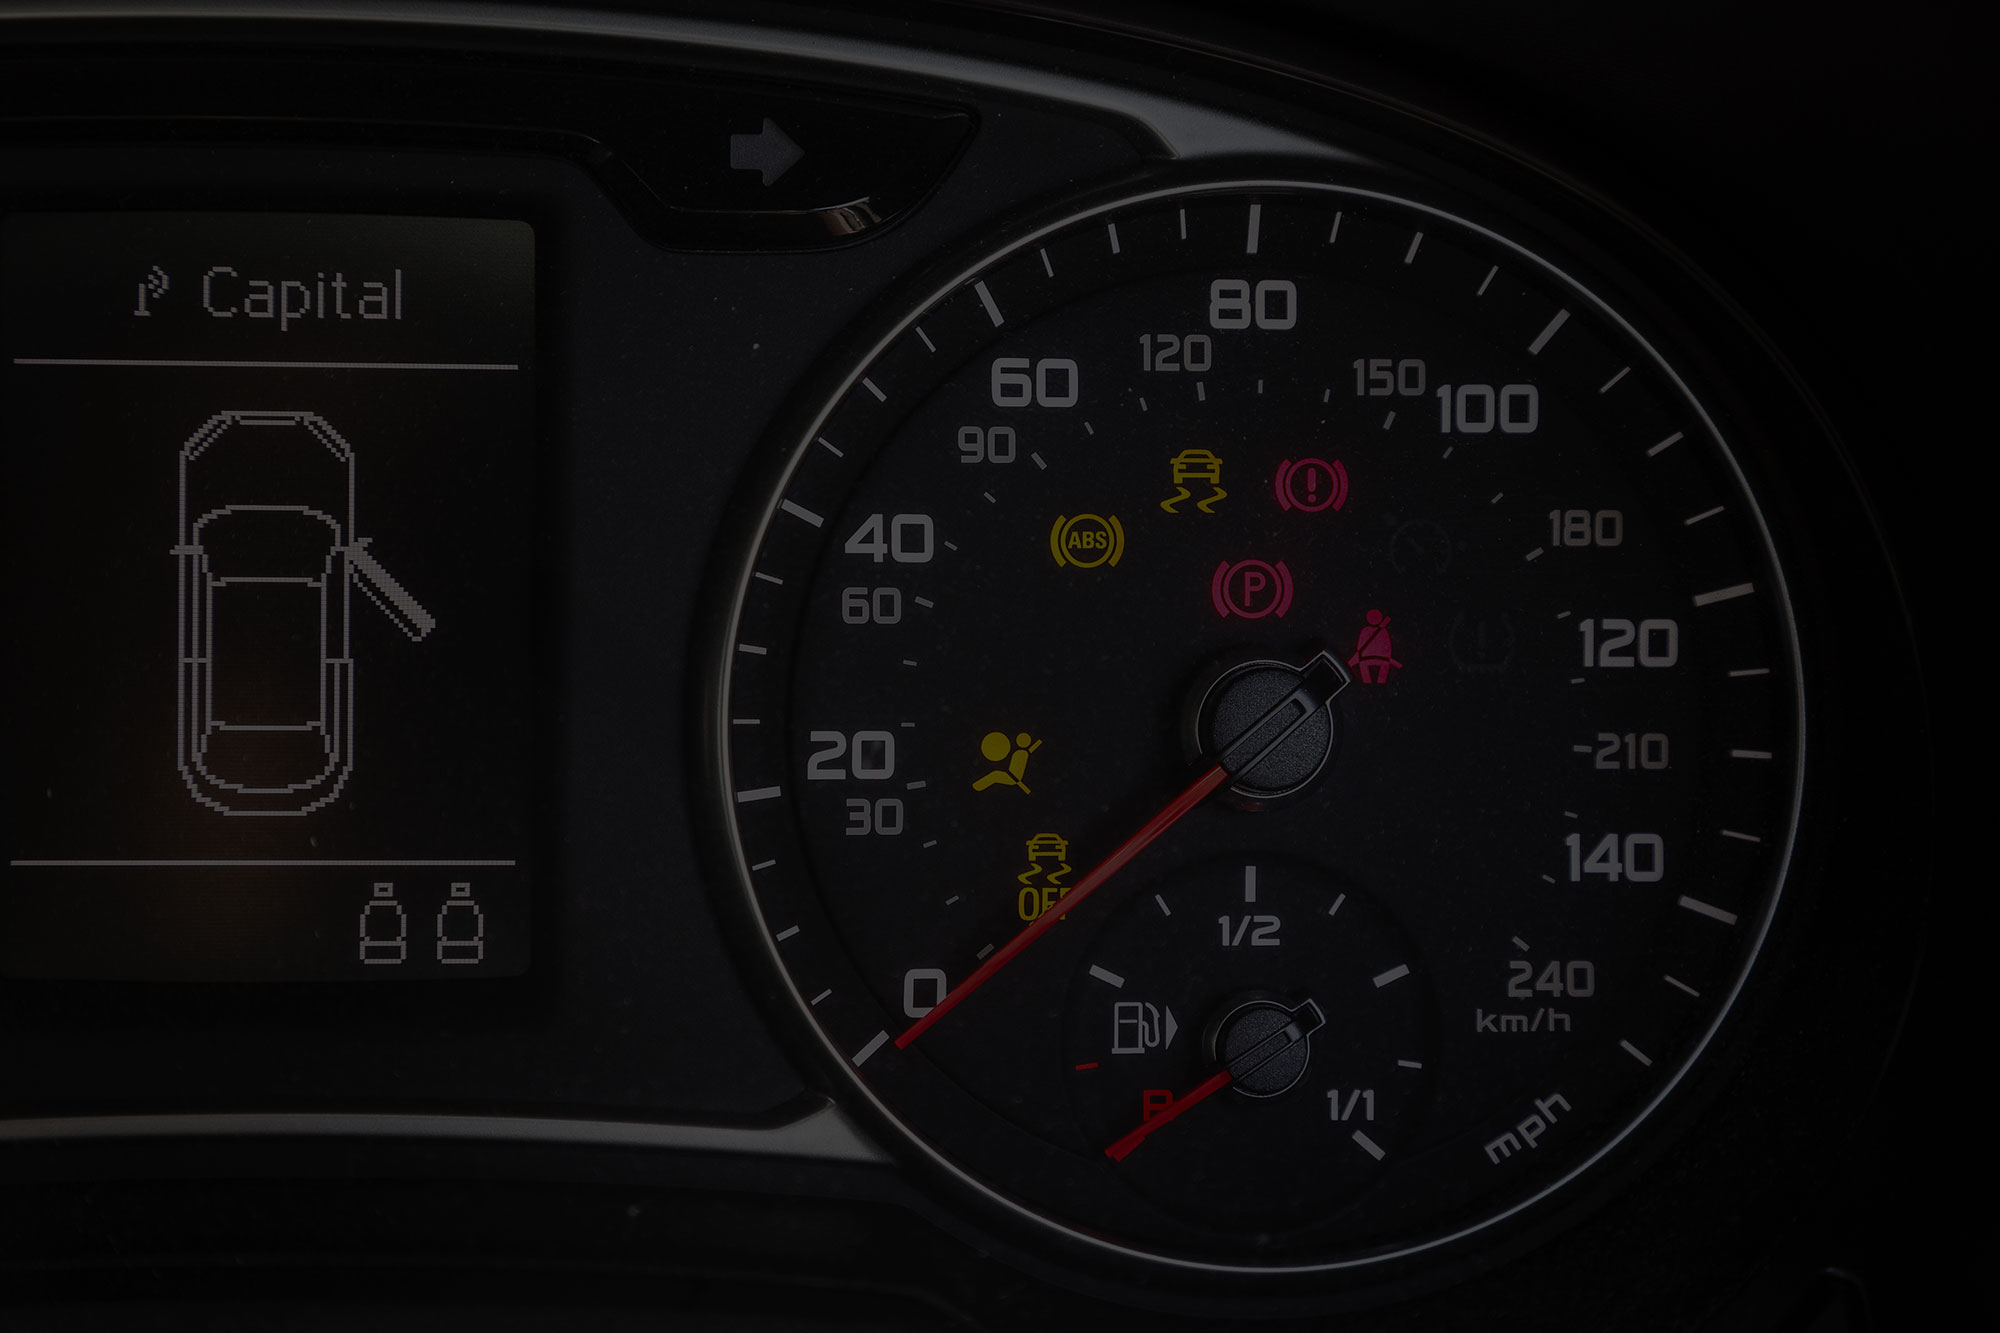 Car dashboard, showing car metrics and warning symbols